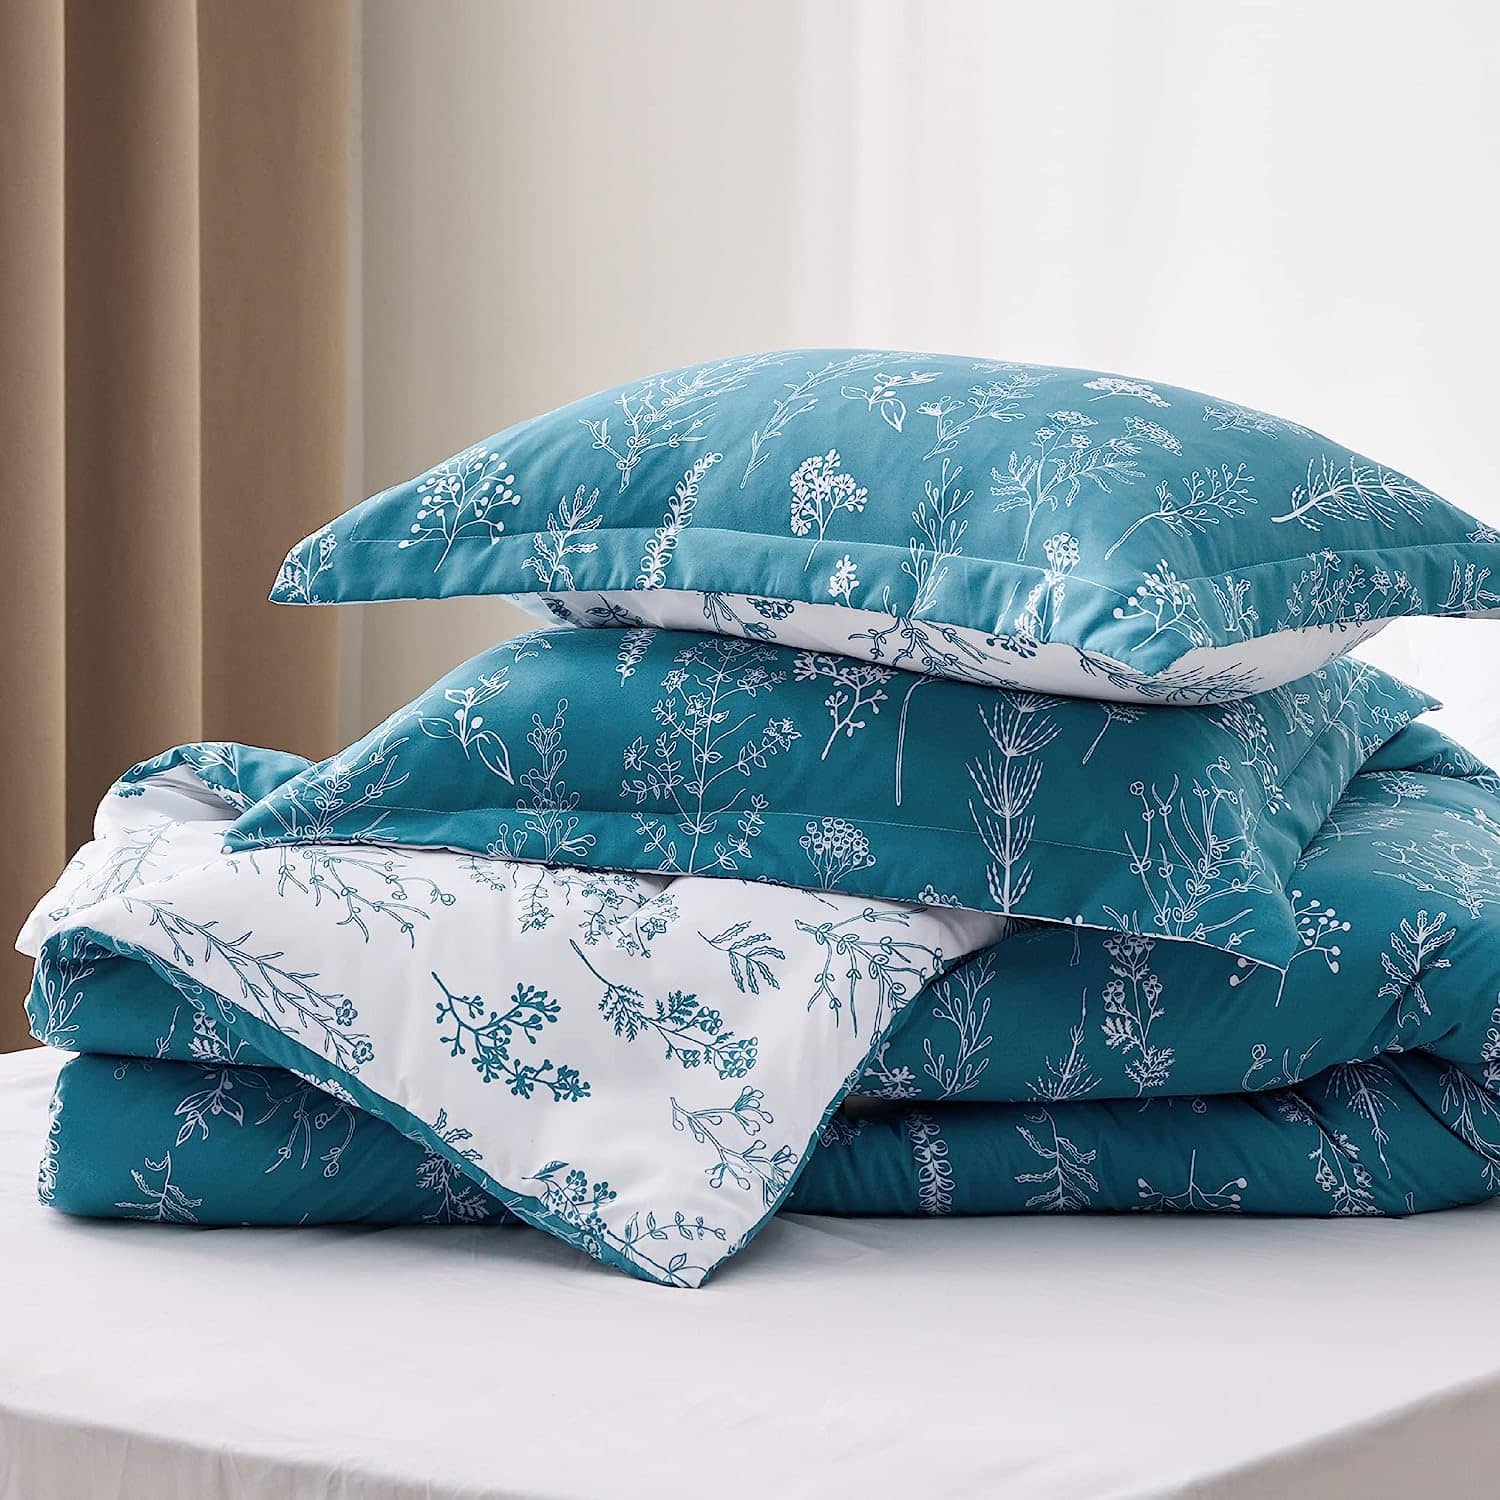 Reversible Floral Print Comforter Set